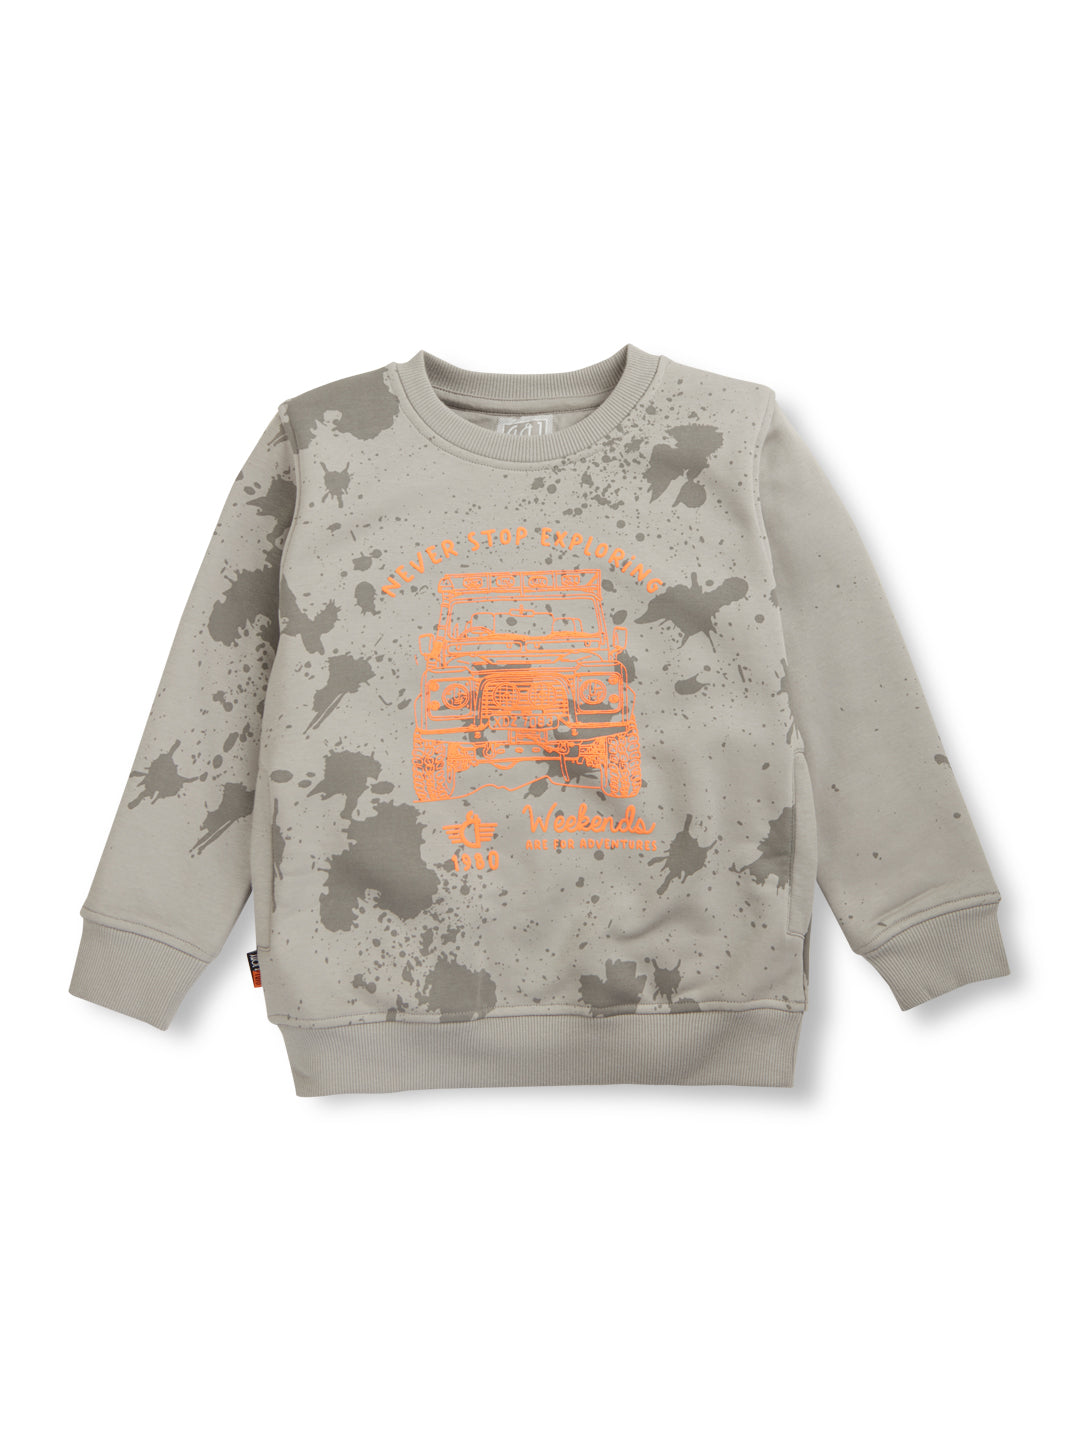 Boys Grey Printed Fleece Sweat Shirt